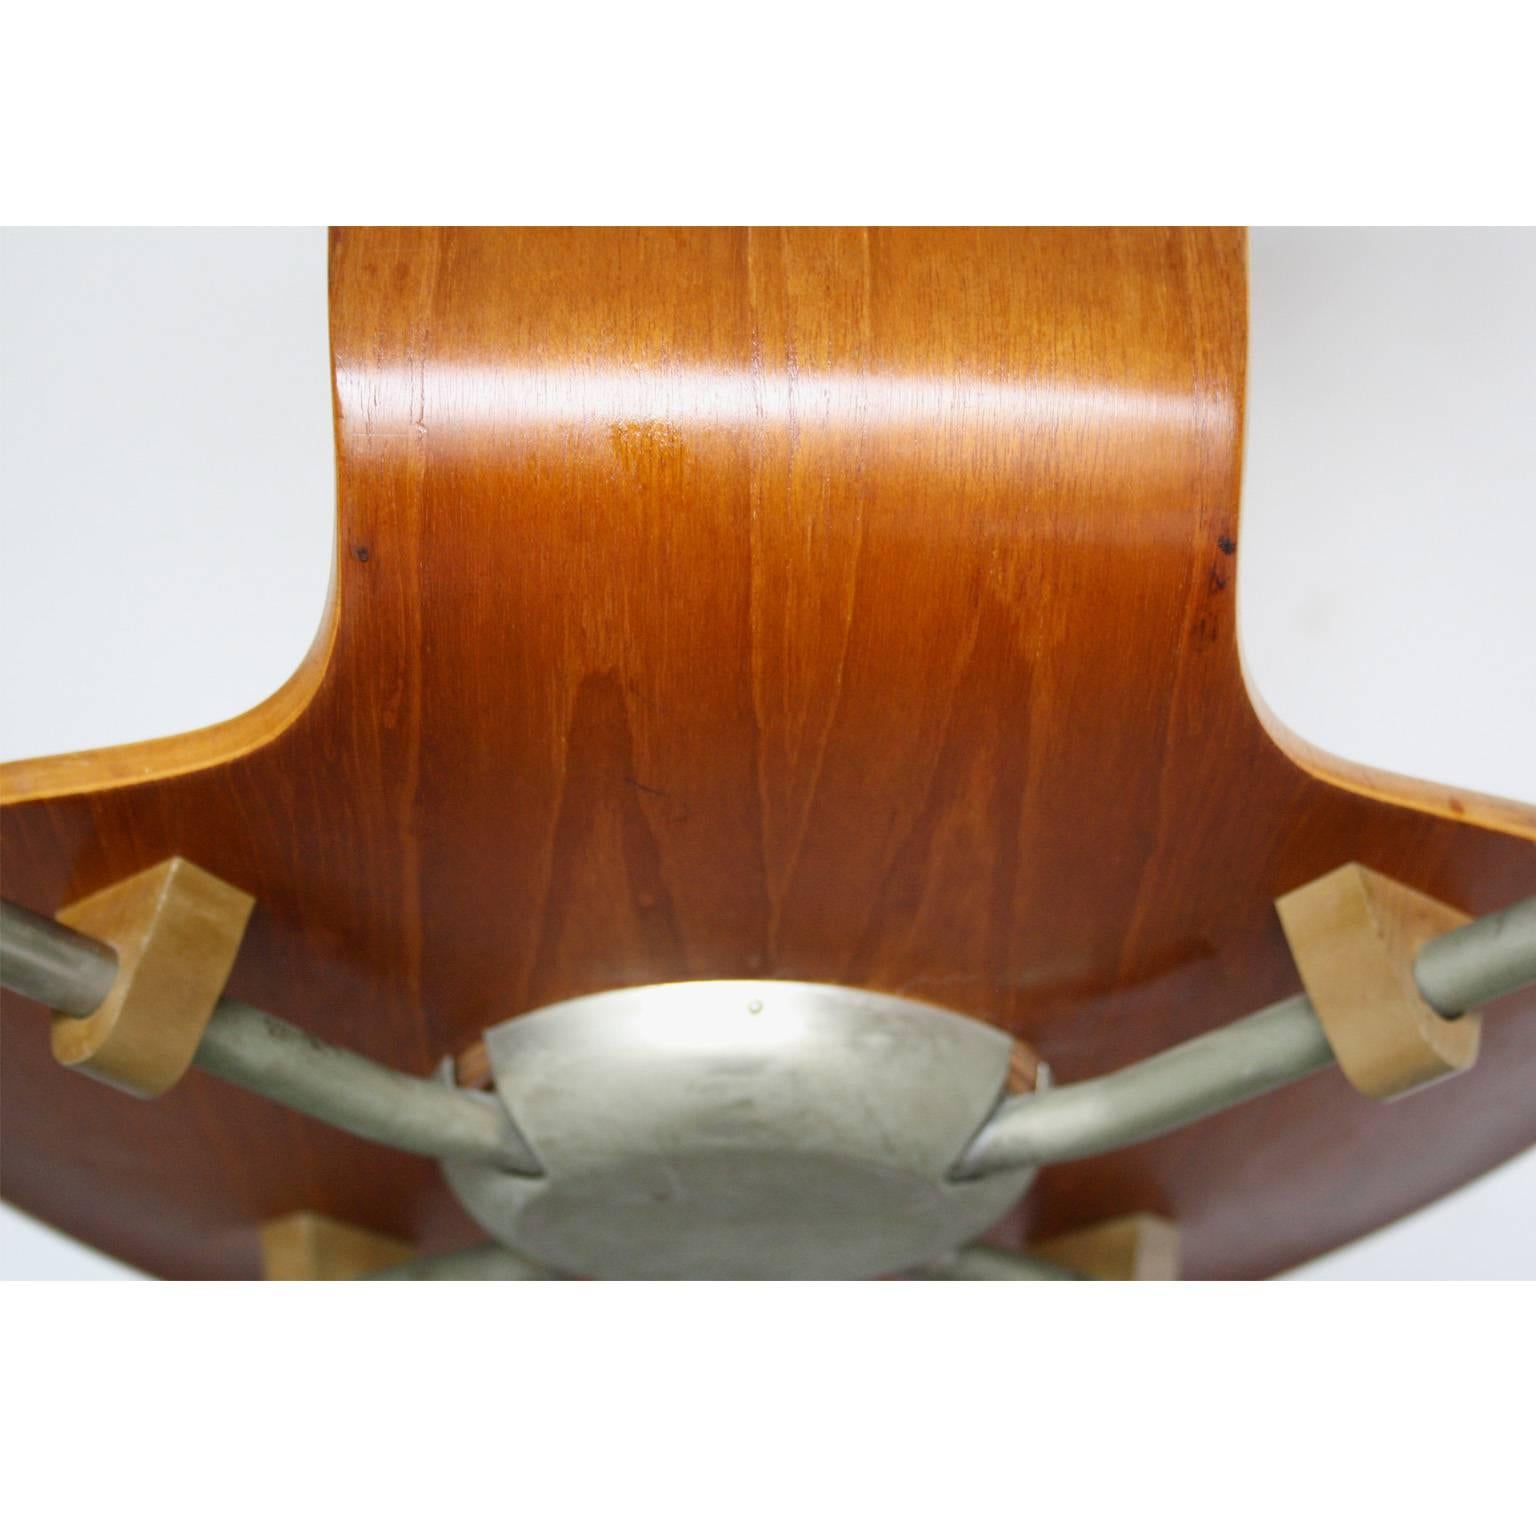 Arne Jacobsen for Fritz Hansen “Mosquito” Dining Chair For Sale 1